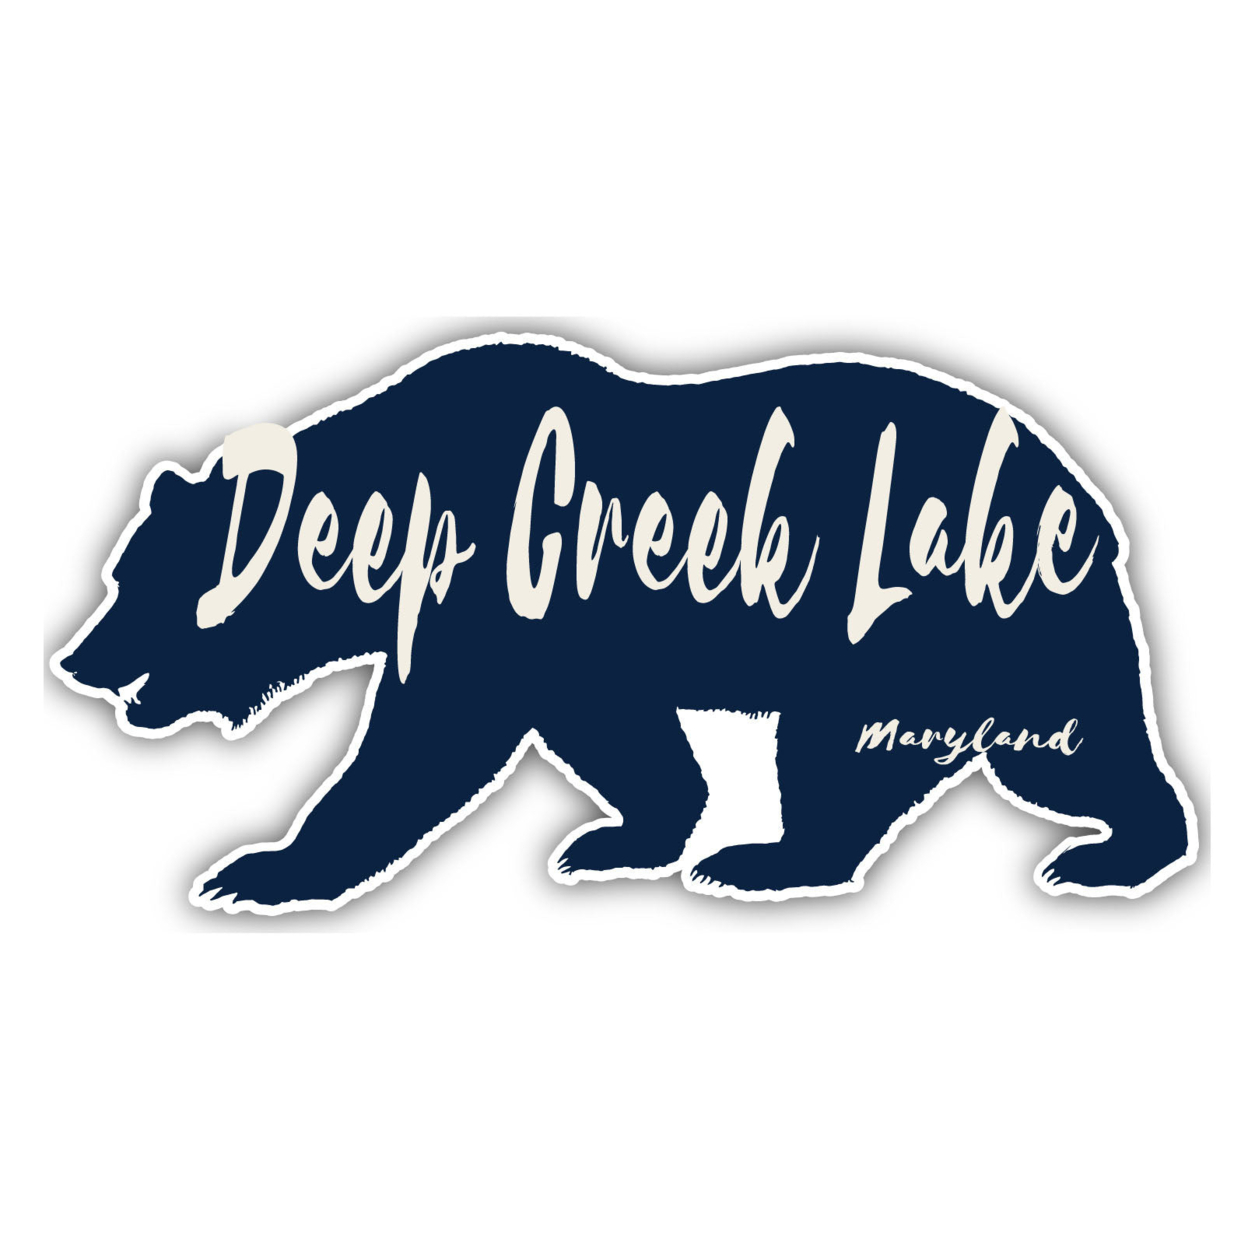 Deep Creek Lake Maryland Souvenir Decorative Stickers (Choose Theme And Size) - Single Unit, 2-Inch, Bear